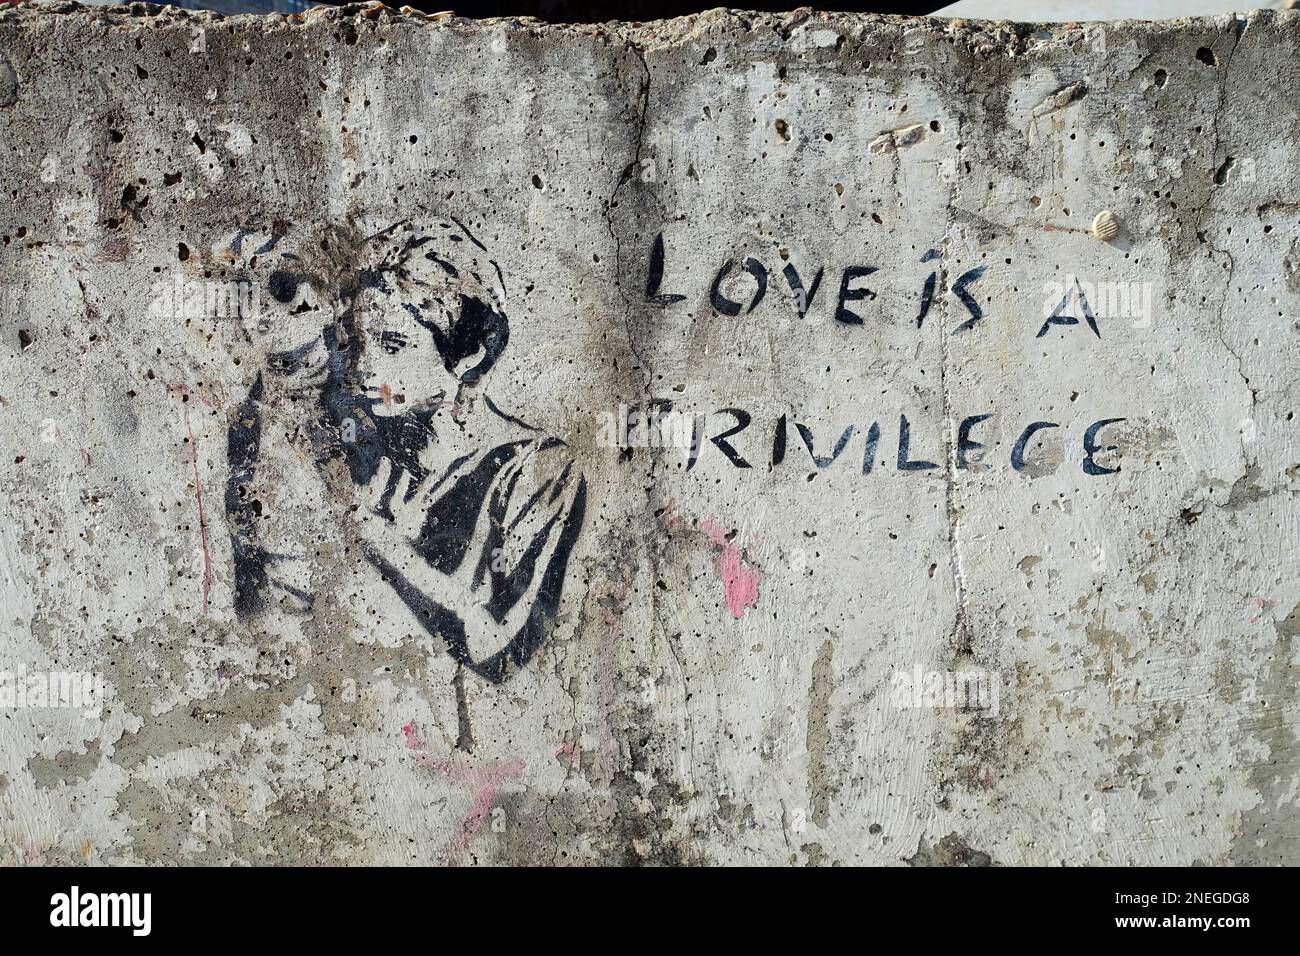 Love is a privilege, Stencil, public ground, Berlin Stock Photo